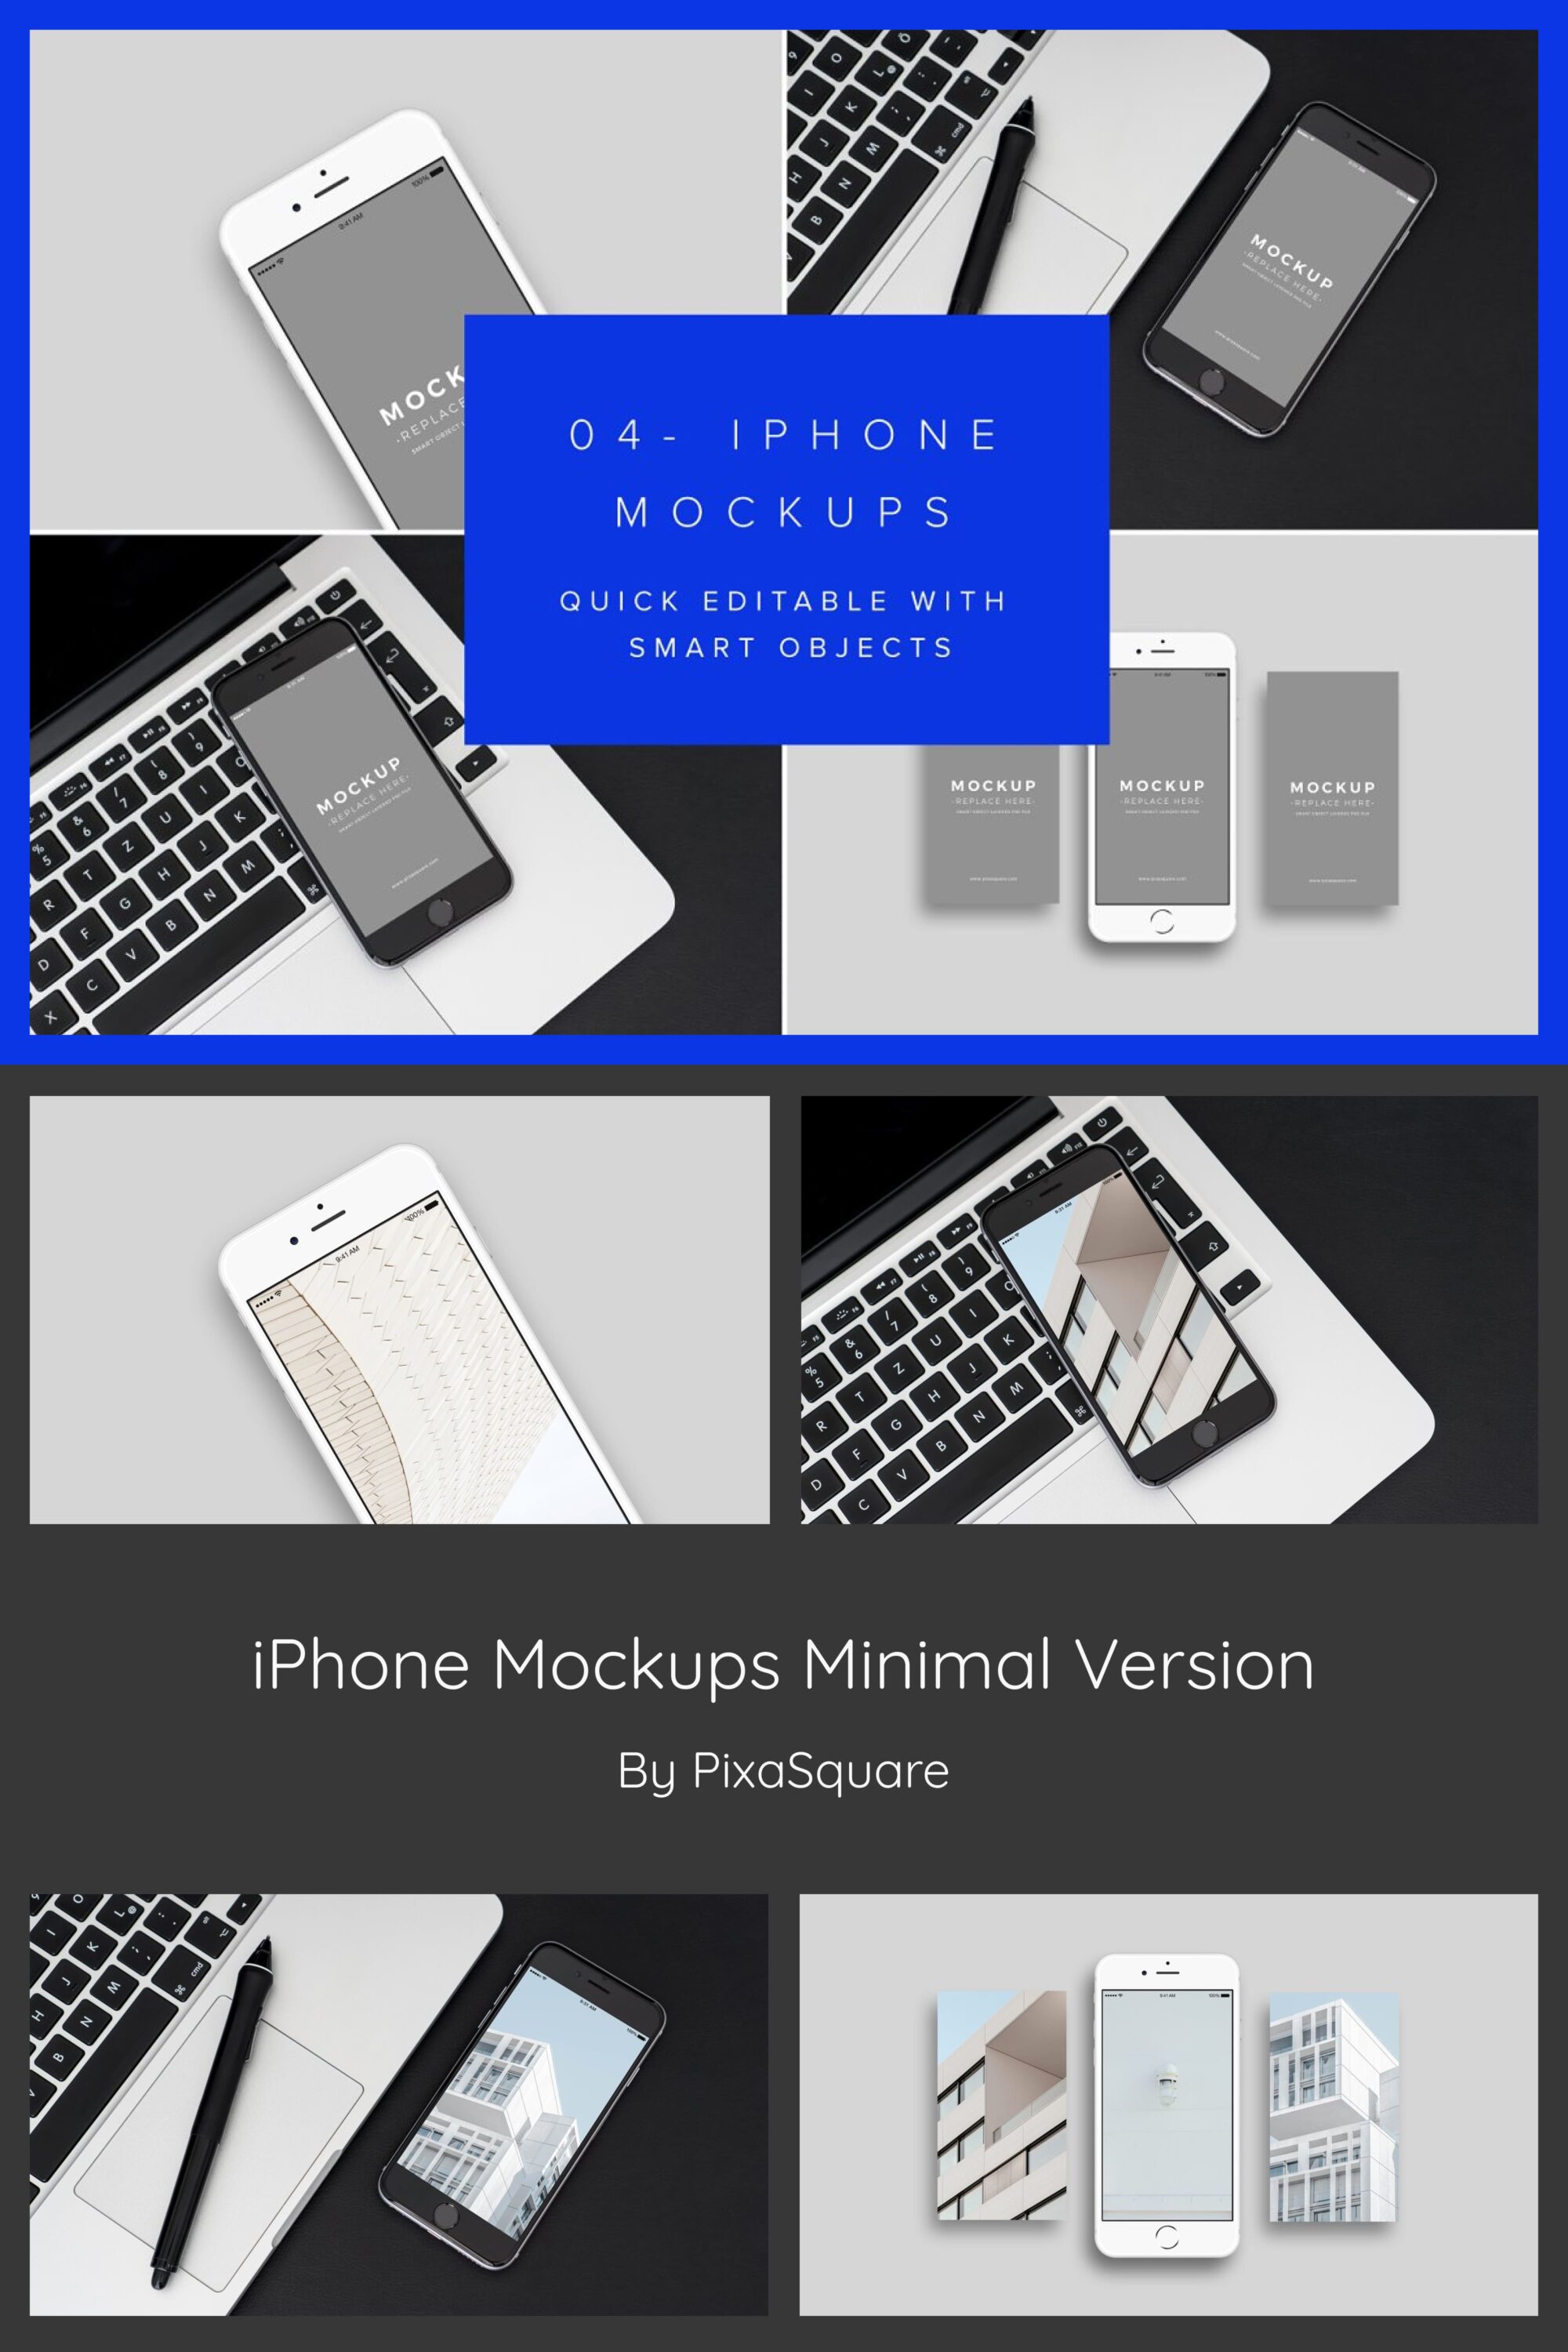 IPhone Mockups Minimal Version - Pinterest.